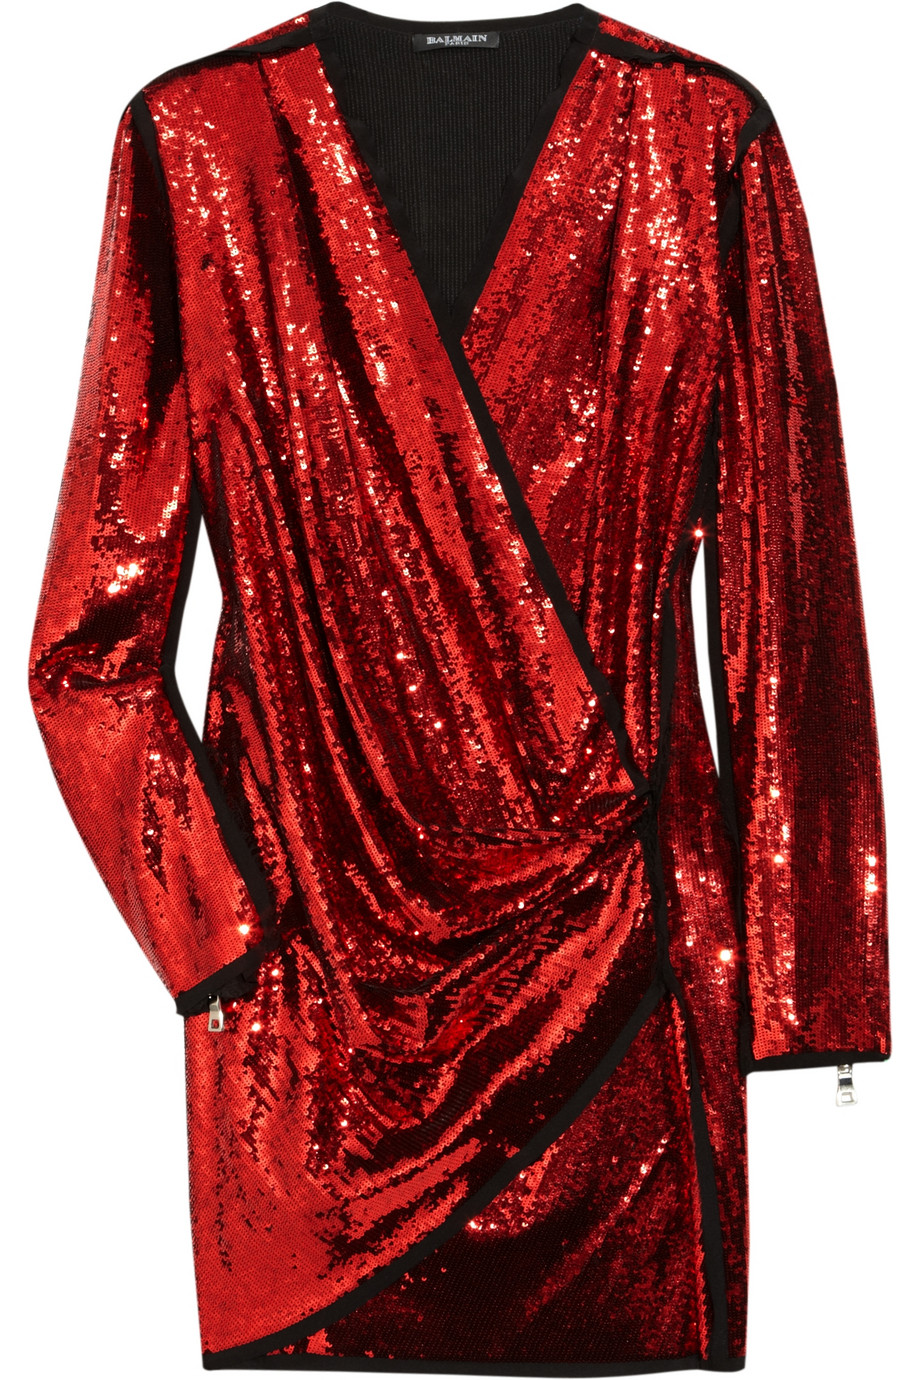 balmain-red-sequin-silk-mini-dress